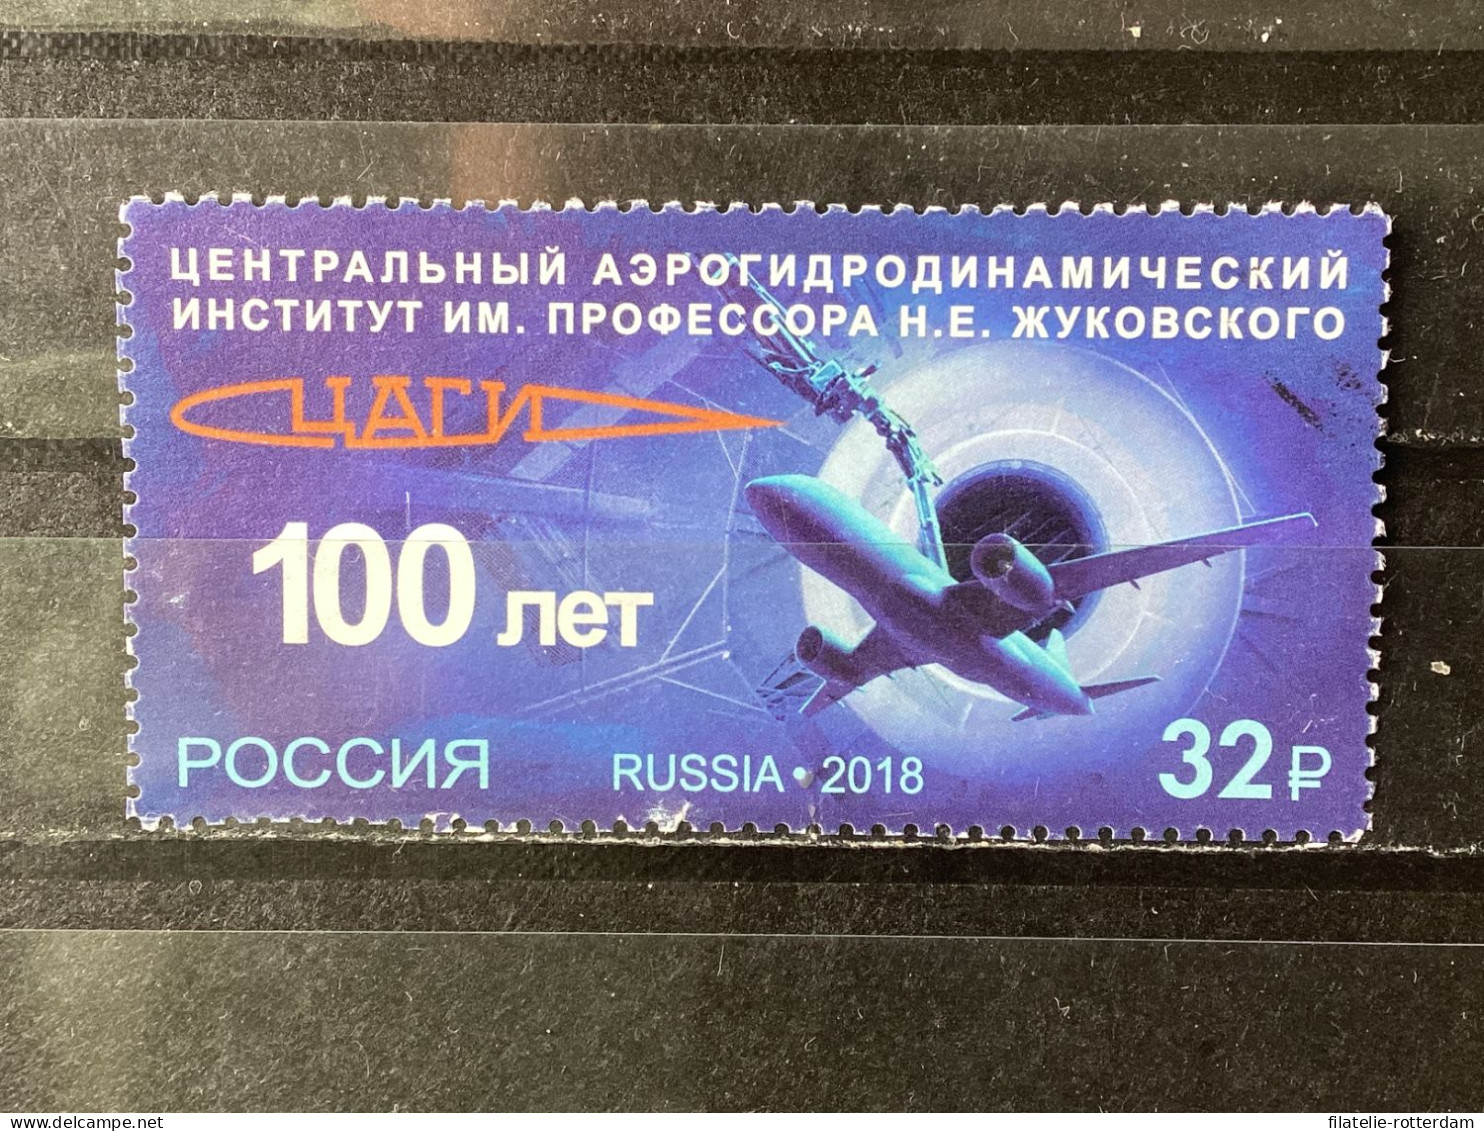 Russia / Rusland - Zhukovsky Central Aerohydrodynamic Institute (32) 2018 - Usados